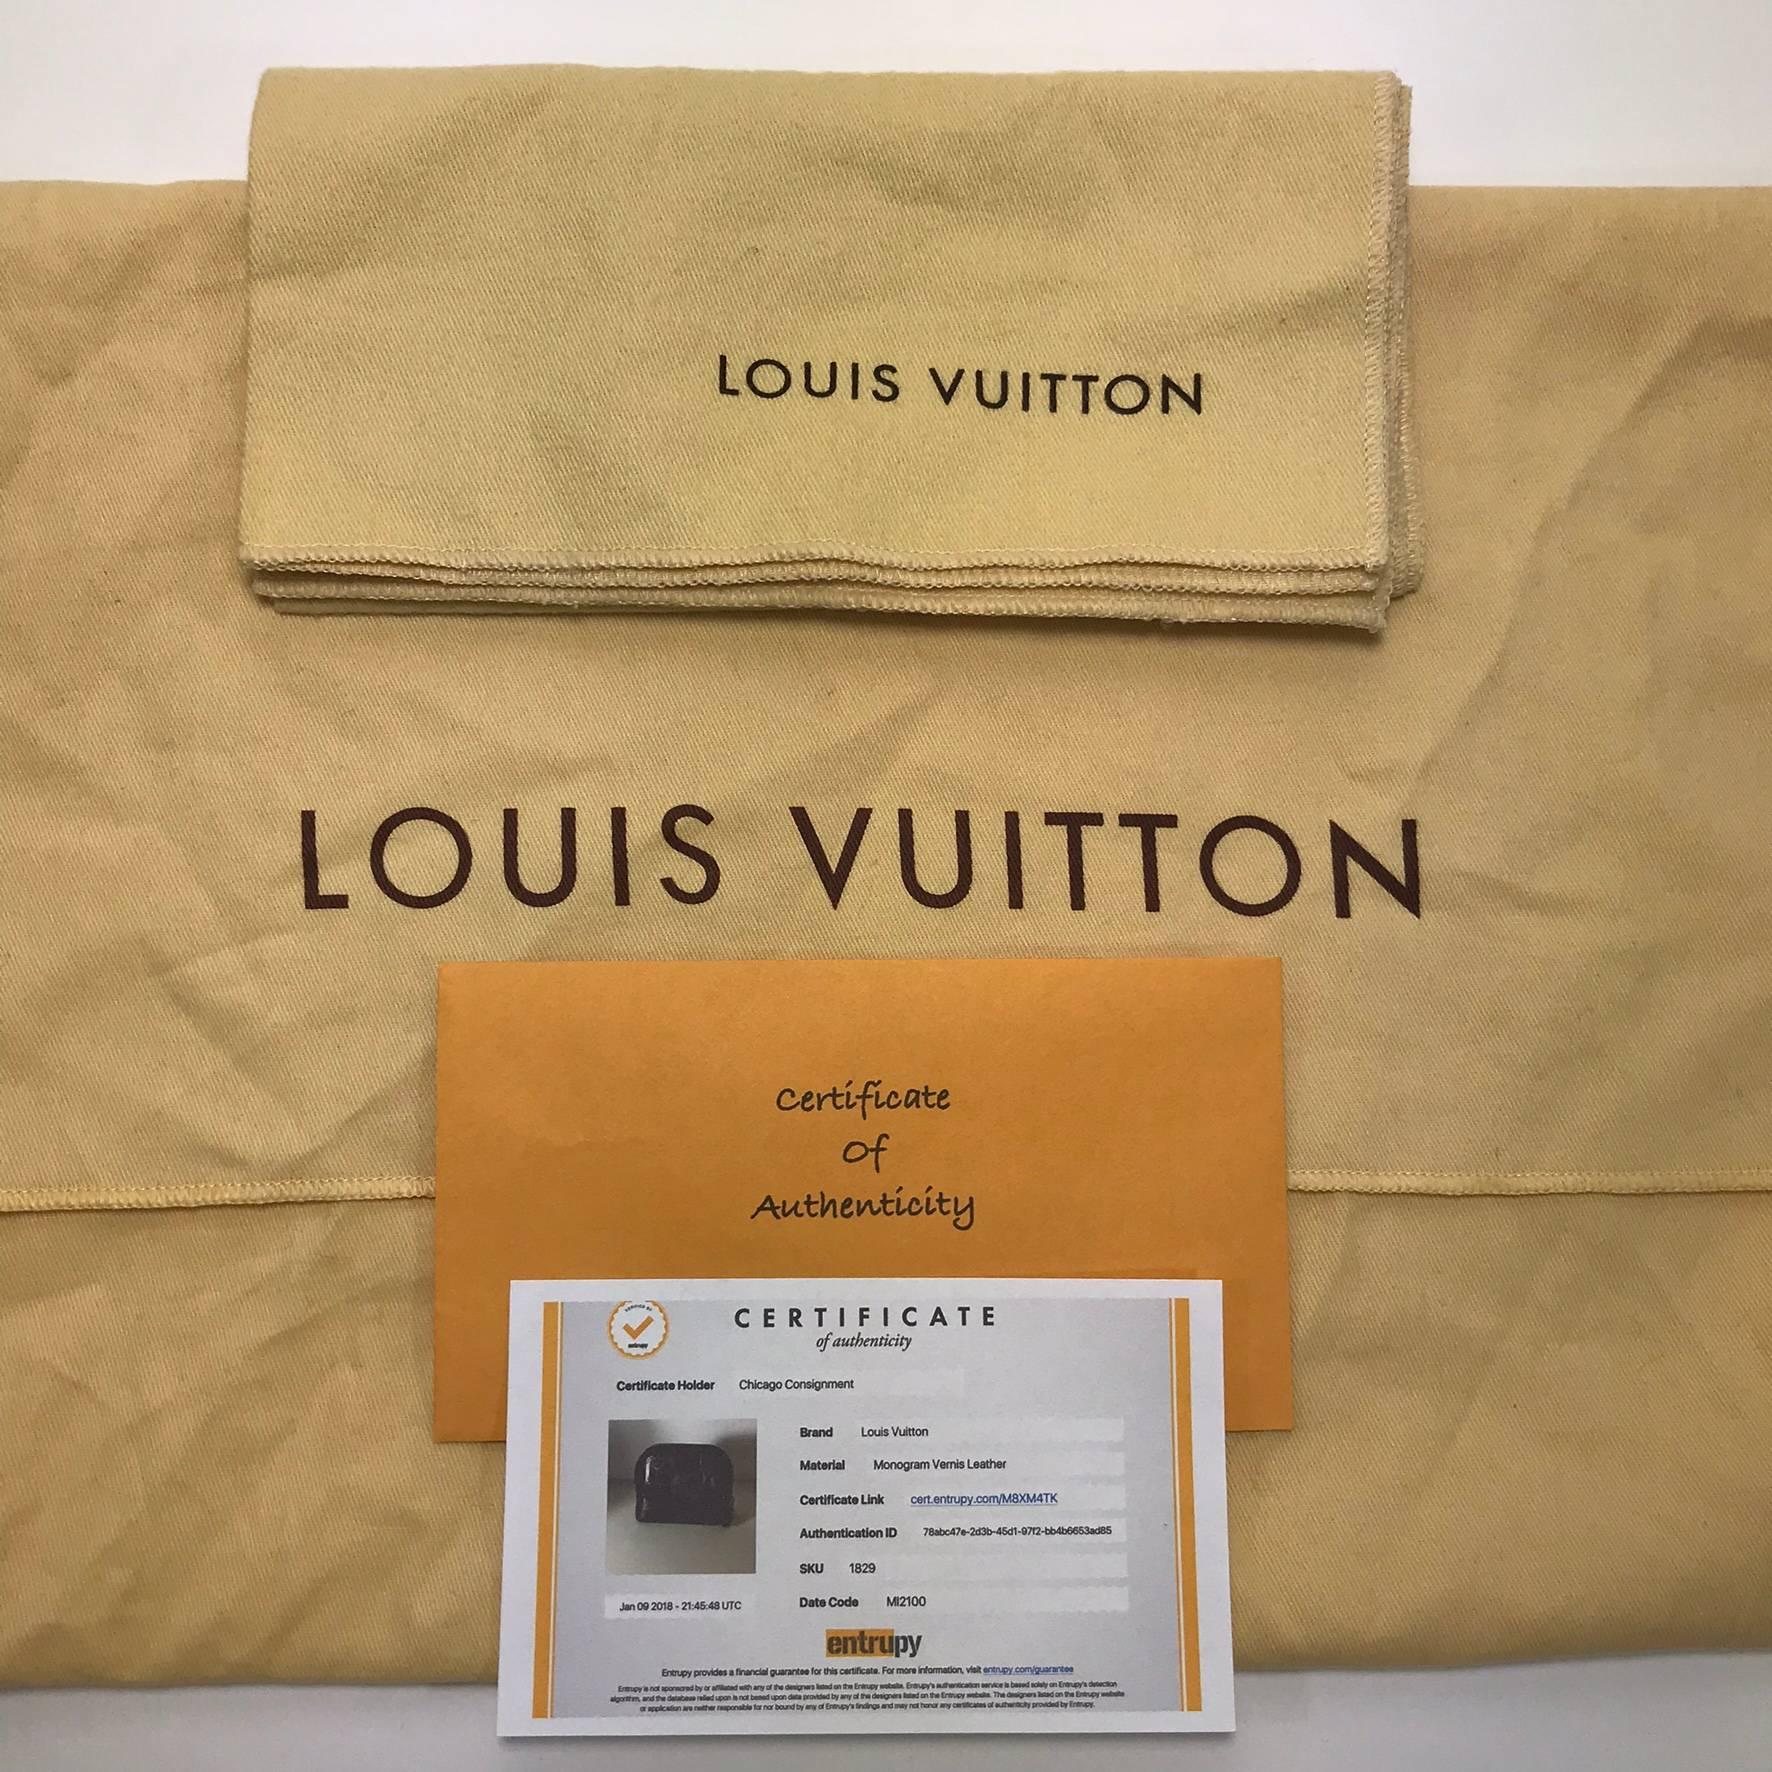 MODEL - Louis Vuitton Vernis Alma BB in Amarante Satchel

CONDITION - Exceptional.  Looks almost new!  Very very minor corner scuffing.
	
SKU - 1829
	
ORIGINAL RETAIL PRICE - 1820 + tax
	
DATE/SERIAL CODE - MI2100
	
ORIGIN - France
	
PRODUCTION -